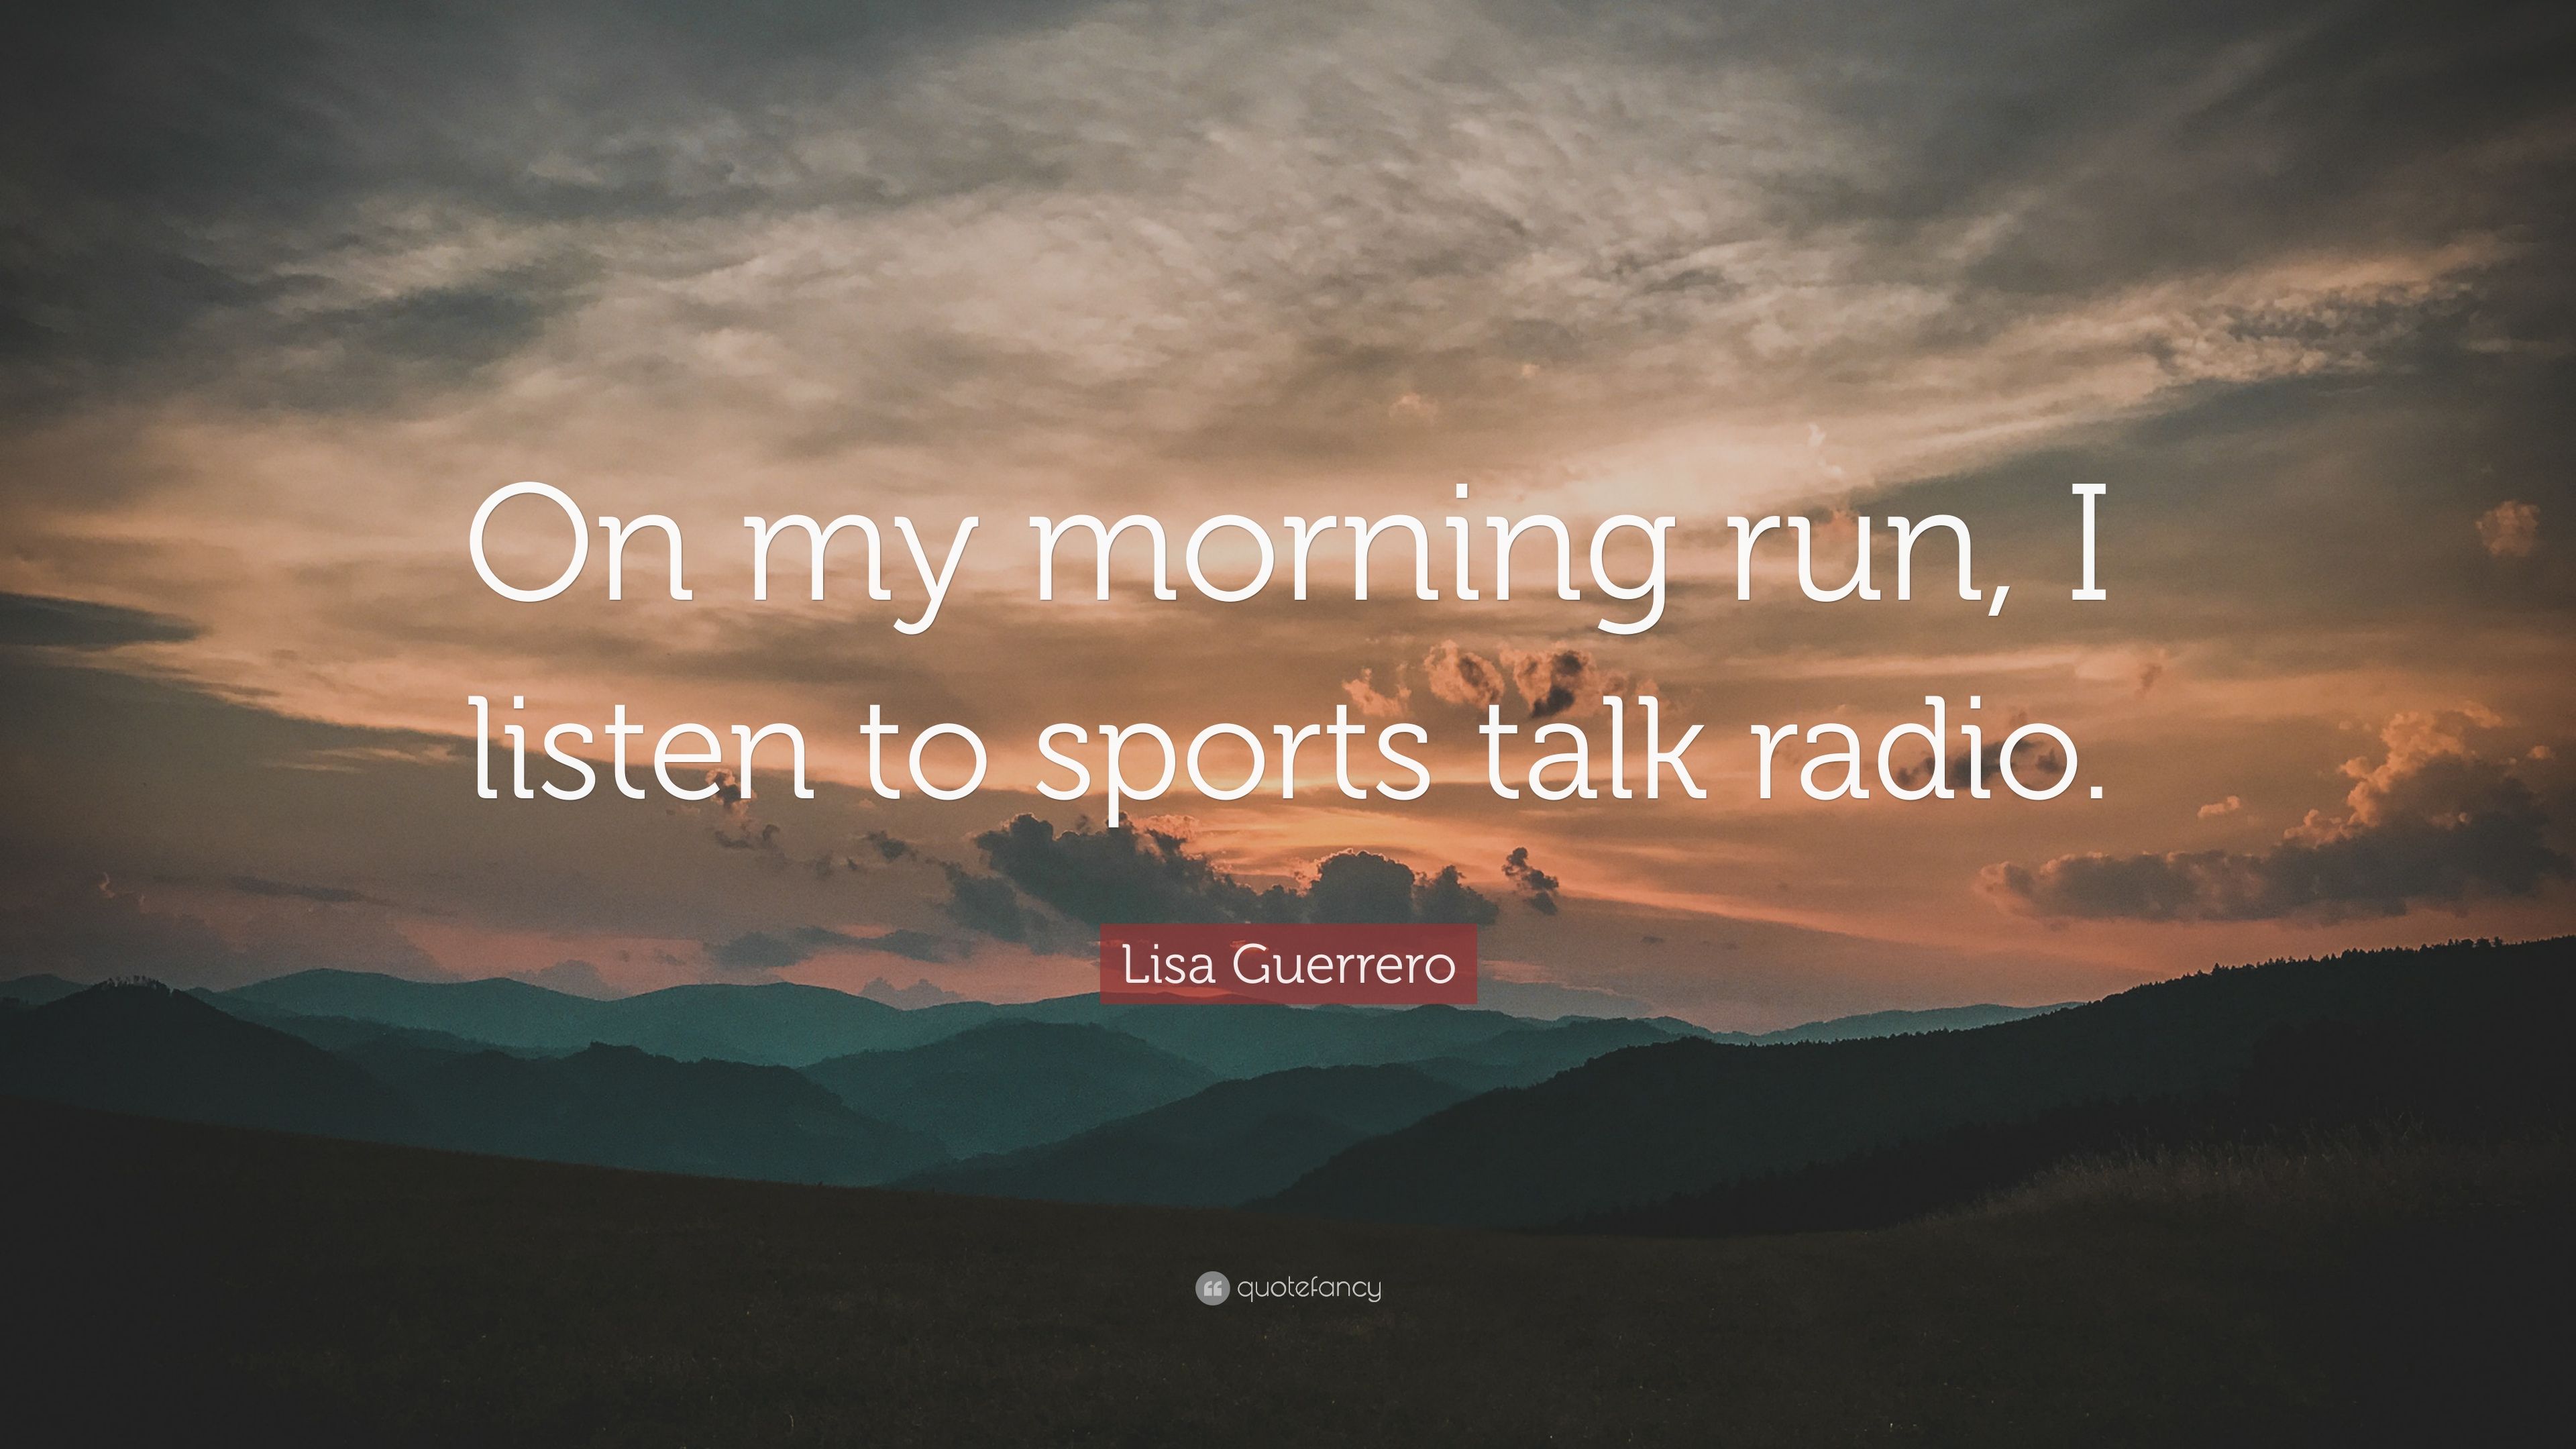 Lisa Guerrero Quote: “On my morning run, I listen to sports talk